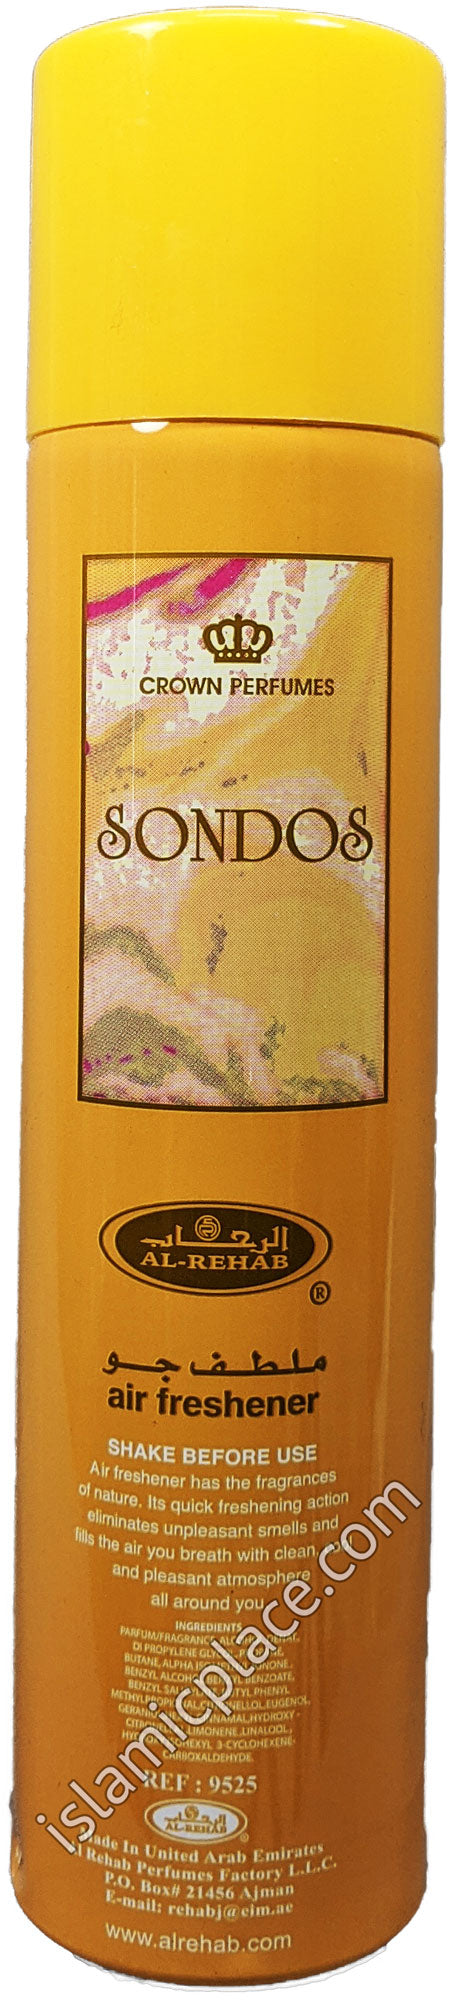 Sondos - Air Freshener Can (300 ml)